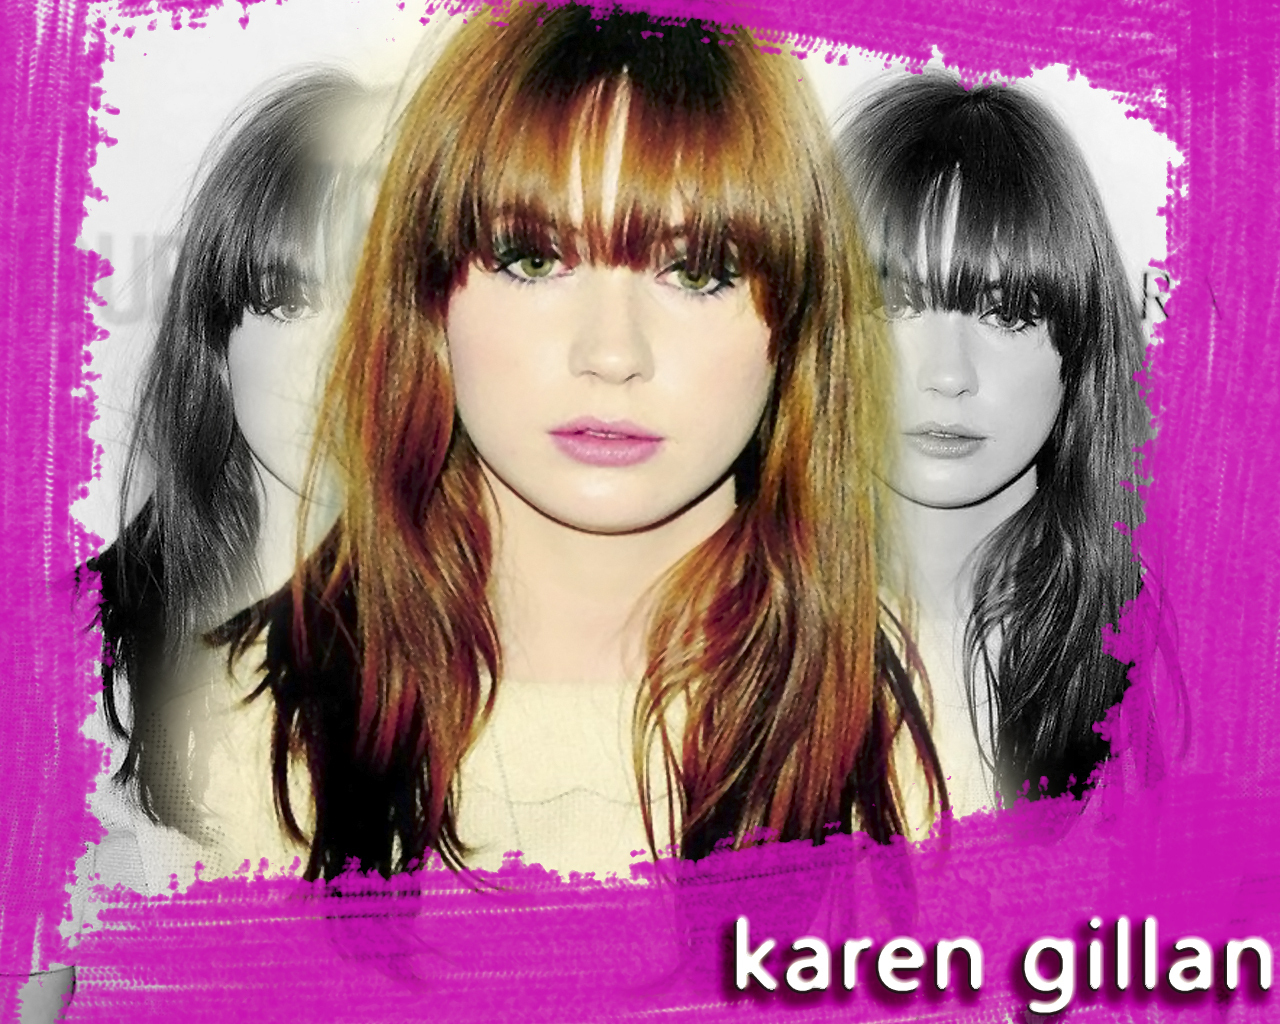 Karen Gillan - Karen Gillan Wallpaper (23033001) - Fanpop